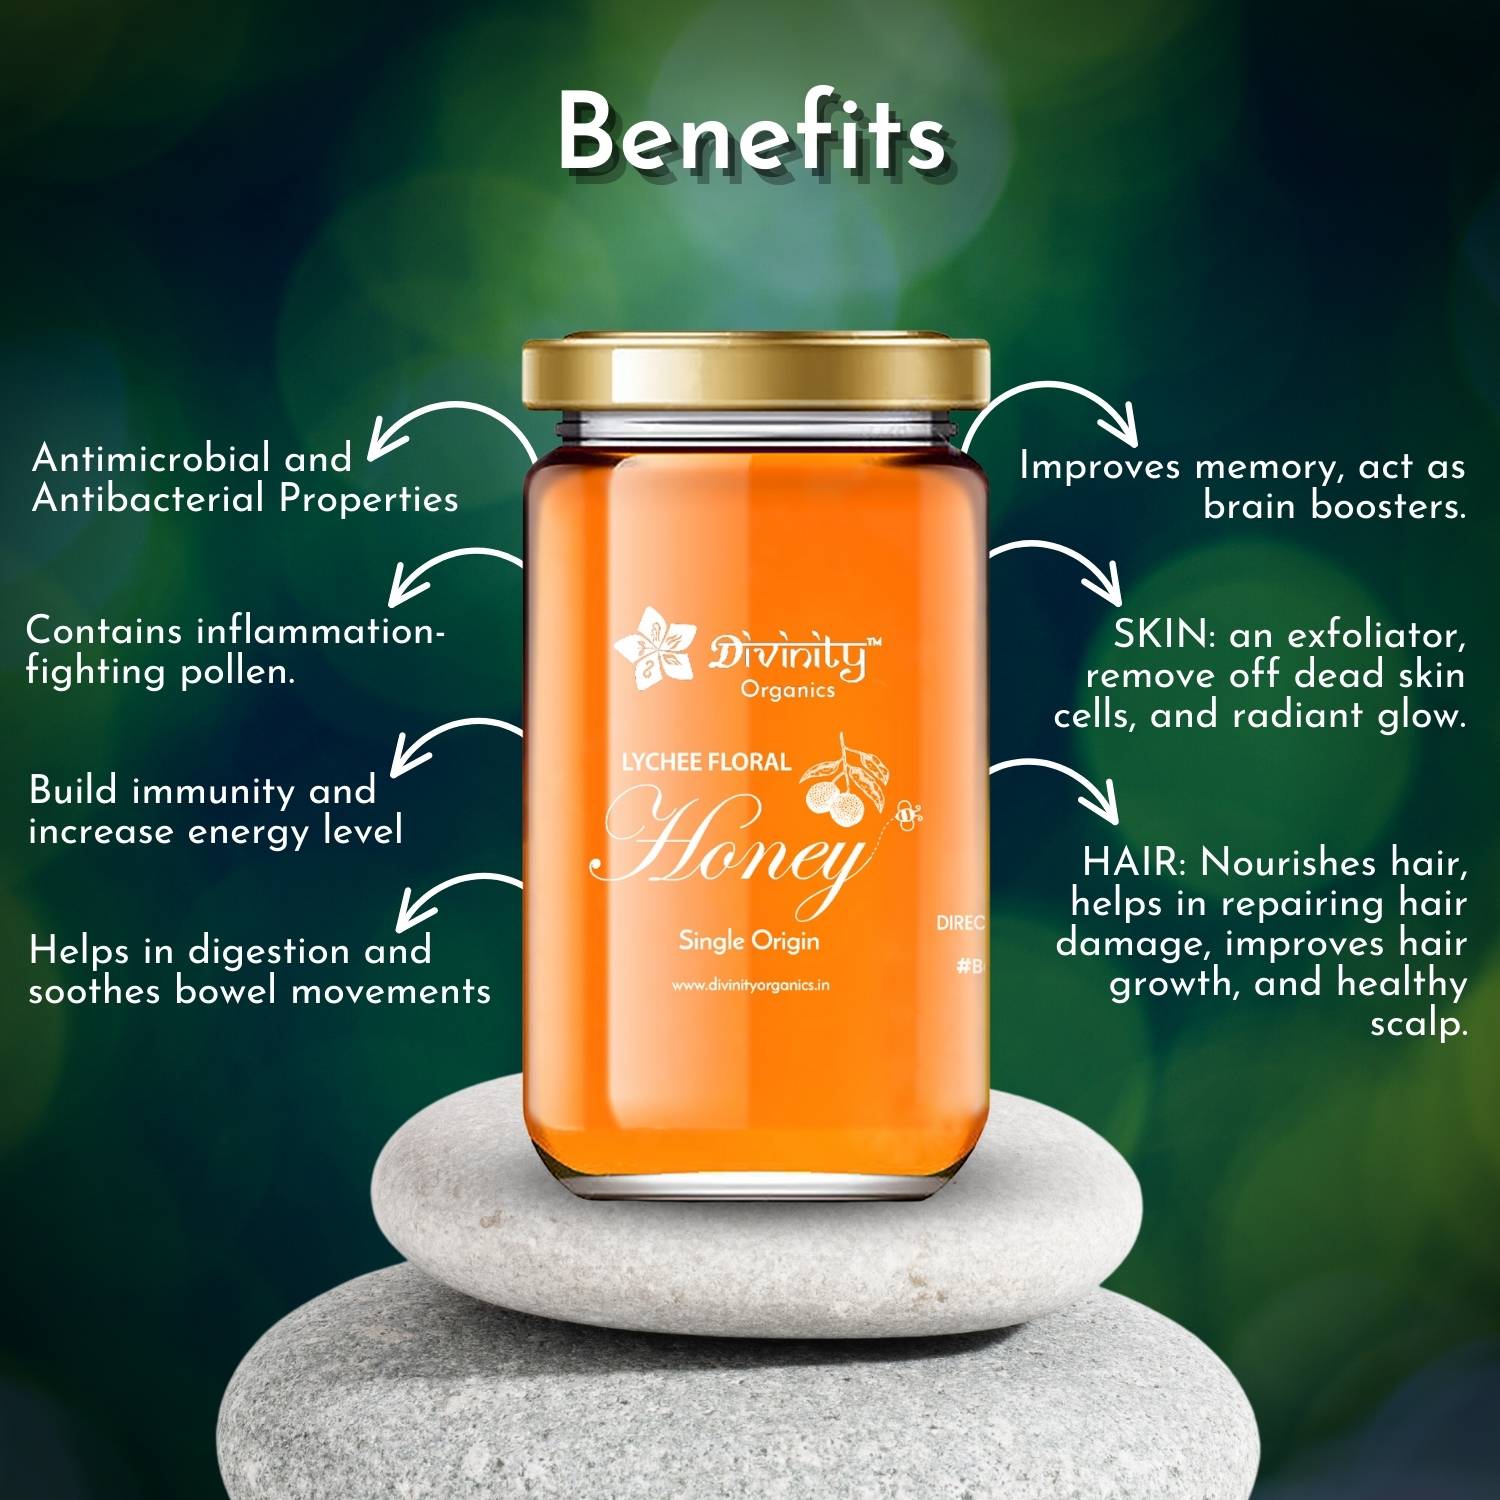 Divinity Organics Lychee Floral Honey Benefits